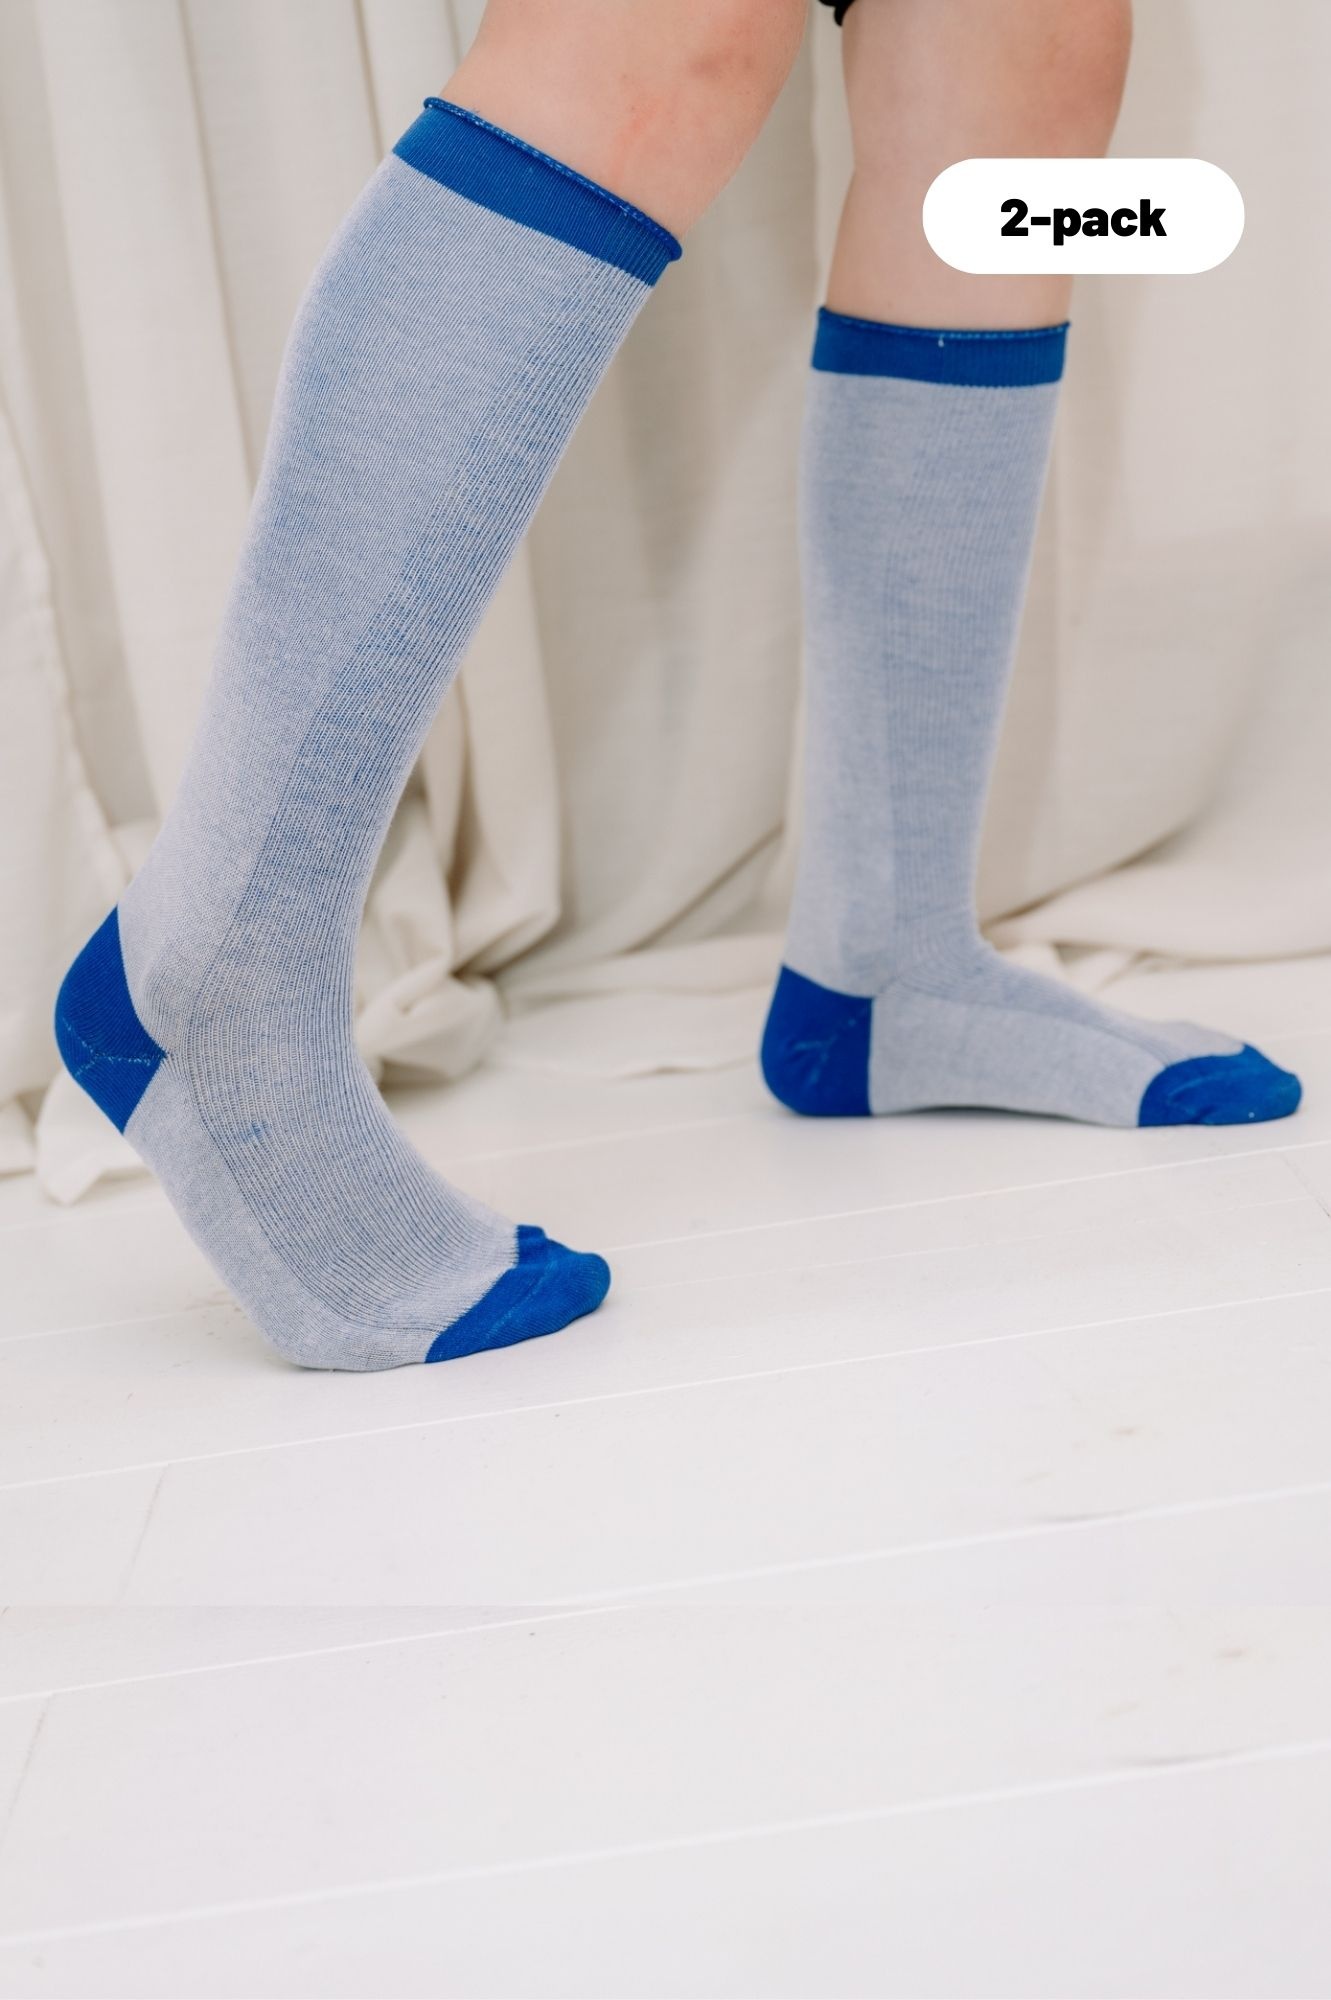 Seamless Egyptian cotton socks